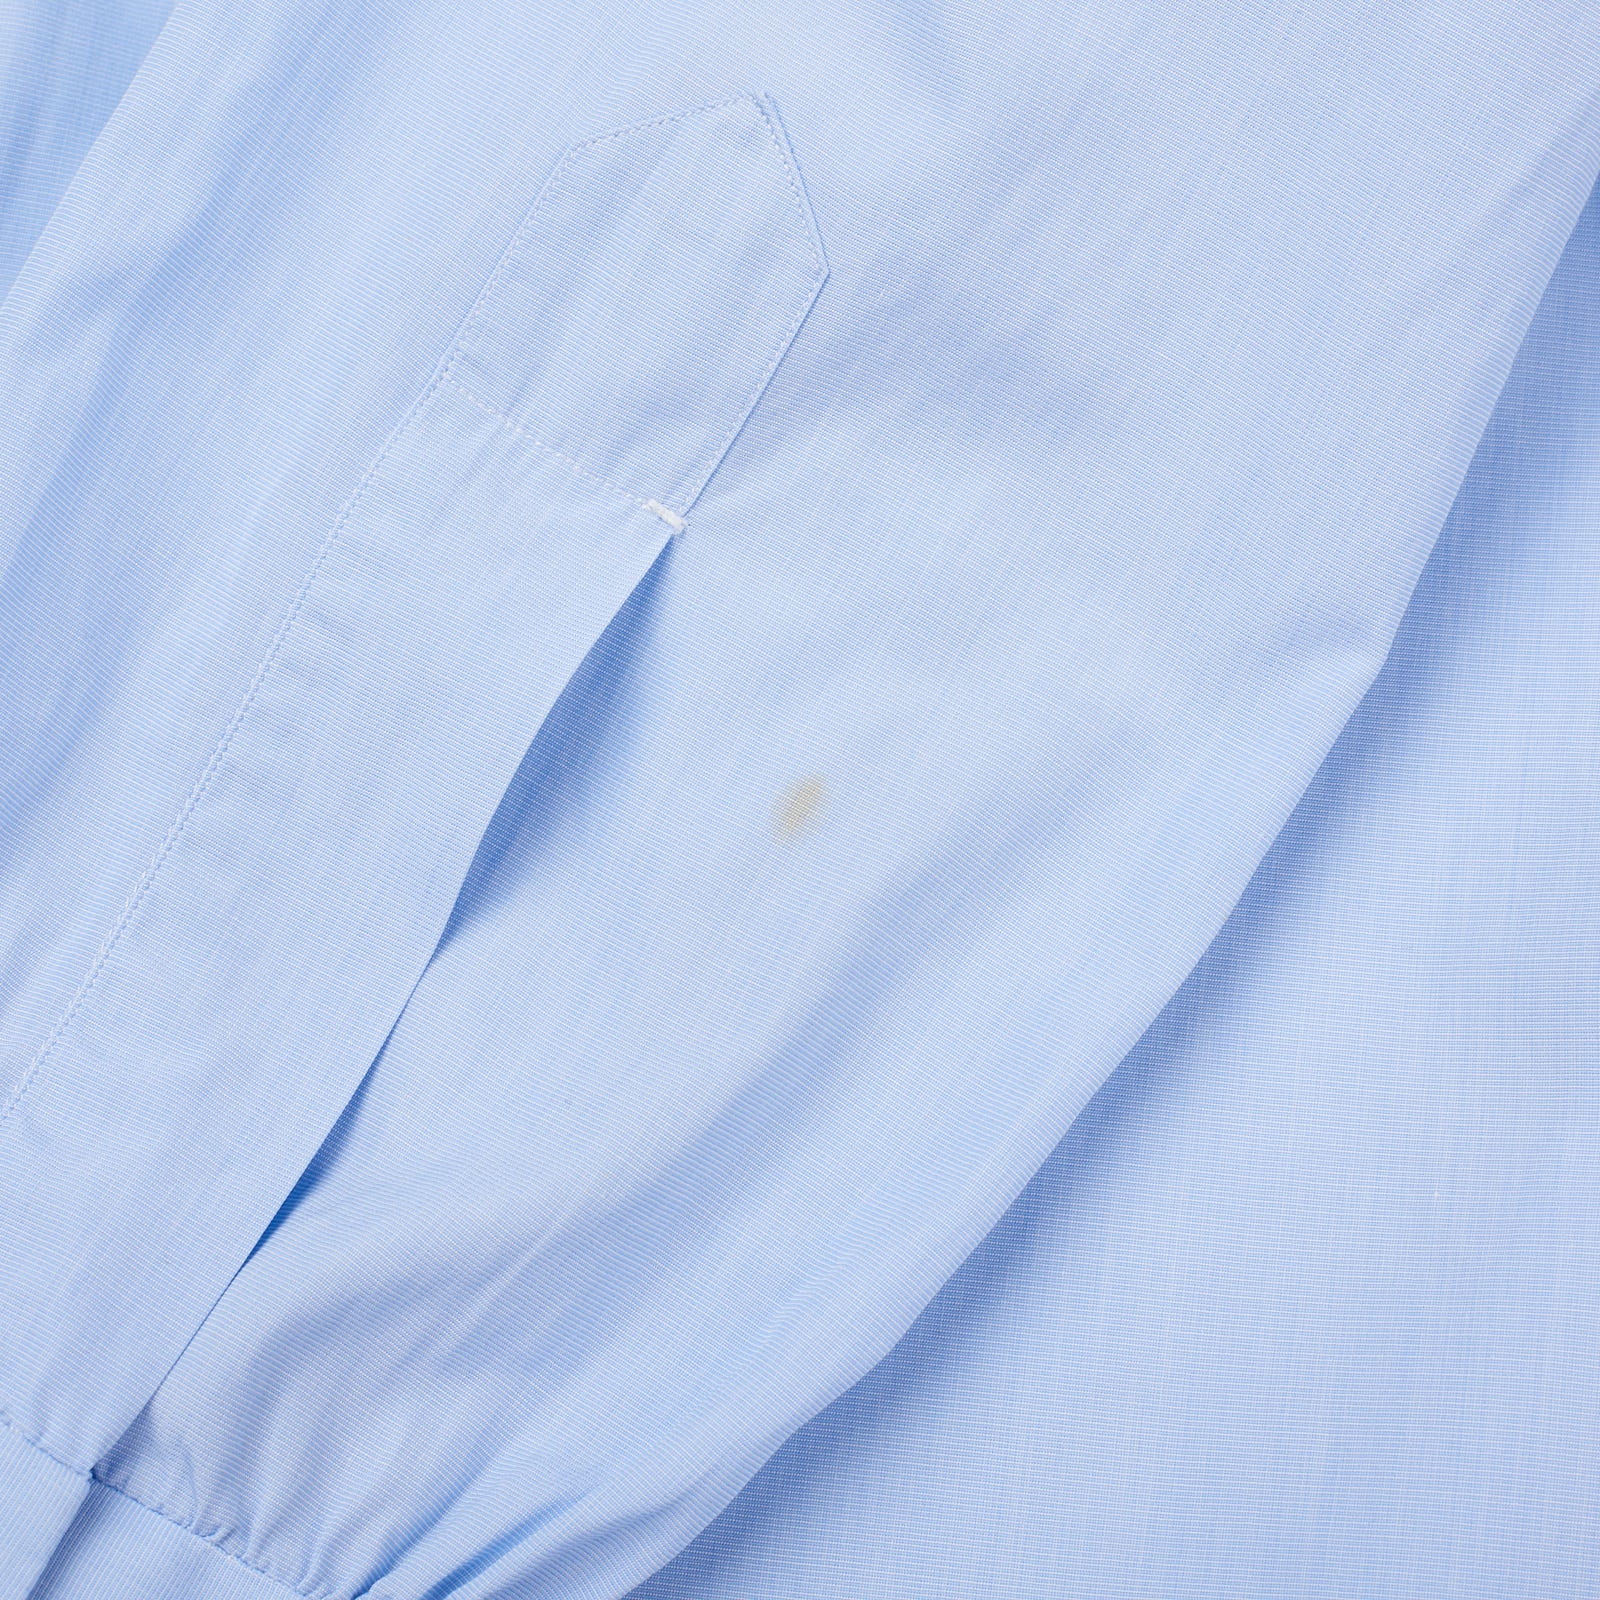 KITON Napoli Handmade Bespoke Light Blue End-on-End Cotton Dress Shirt EU 40 US 15.75 KITON